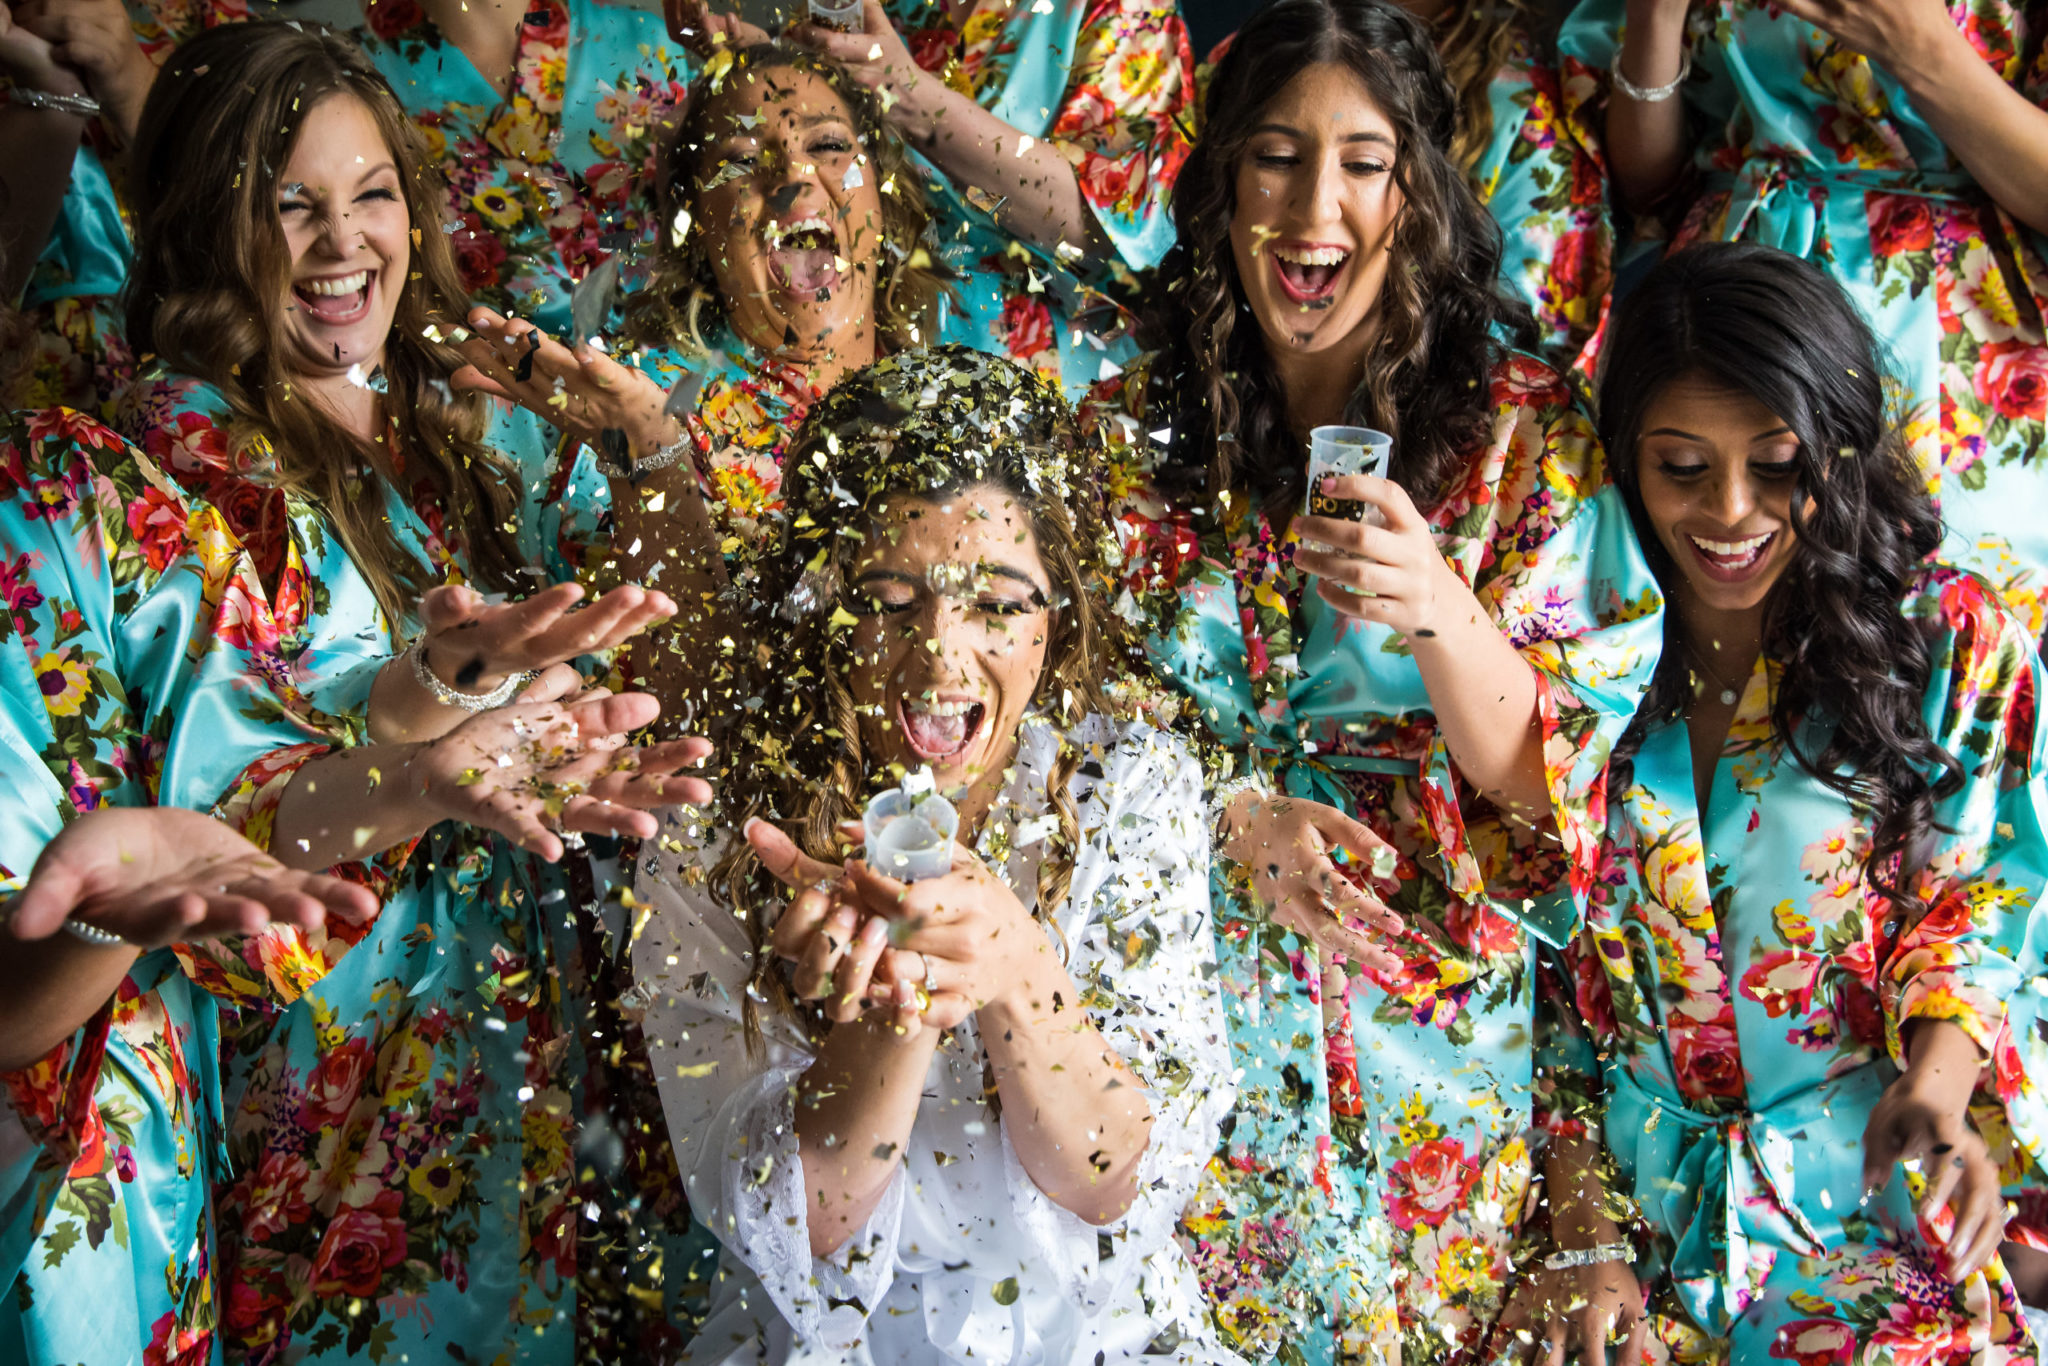 Marigold NJ Wedding Photographer, Lisa Rhinehart, captures this fun, creative, unique image of the bride and her bridesmaids as the confetti falls around them